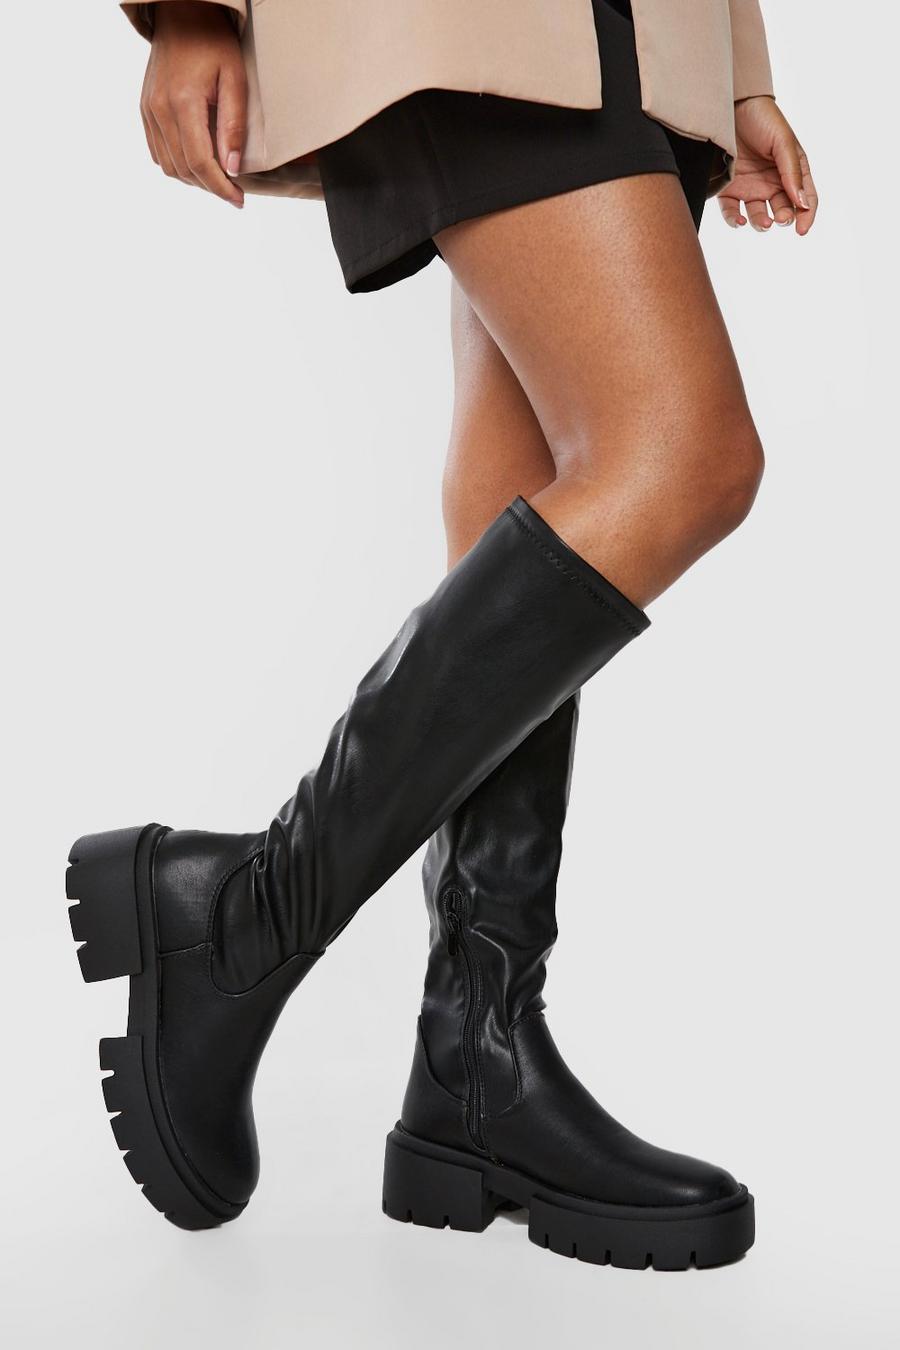 boohoo Chunky Knee High Boots - Black - Size 6